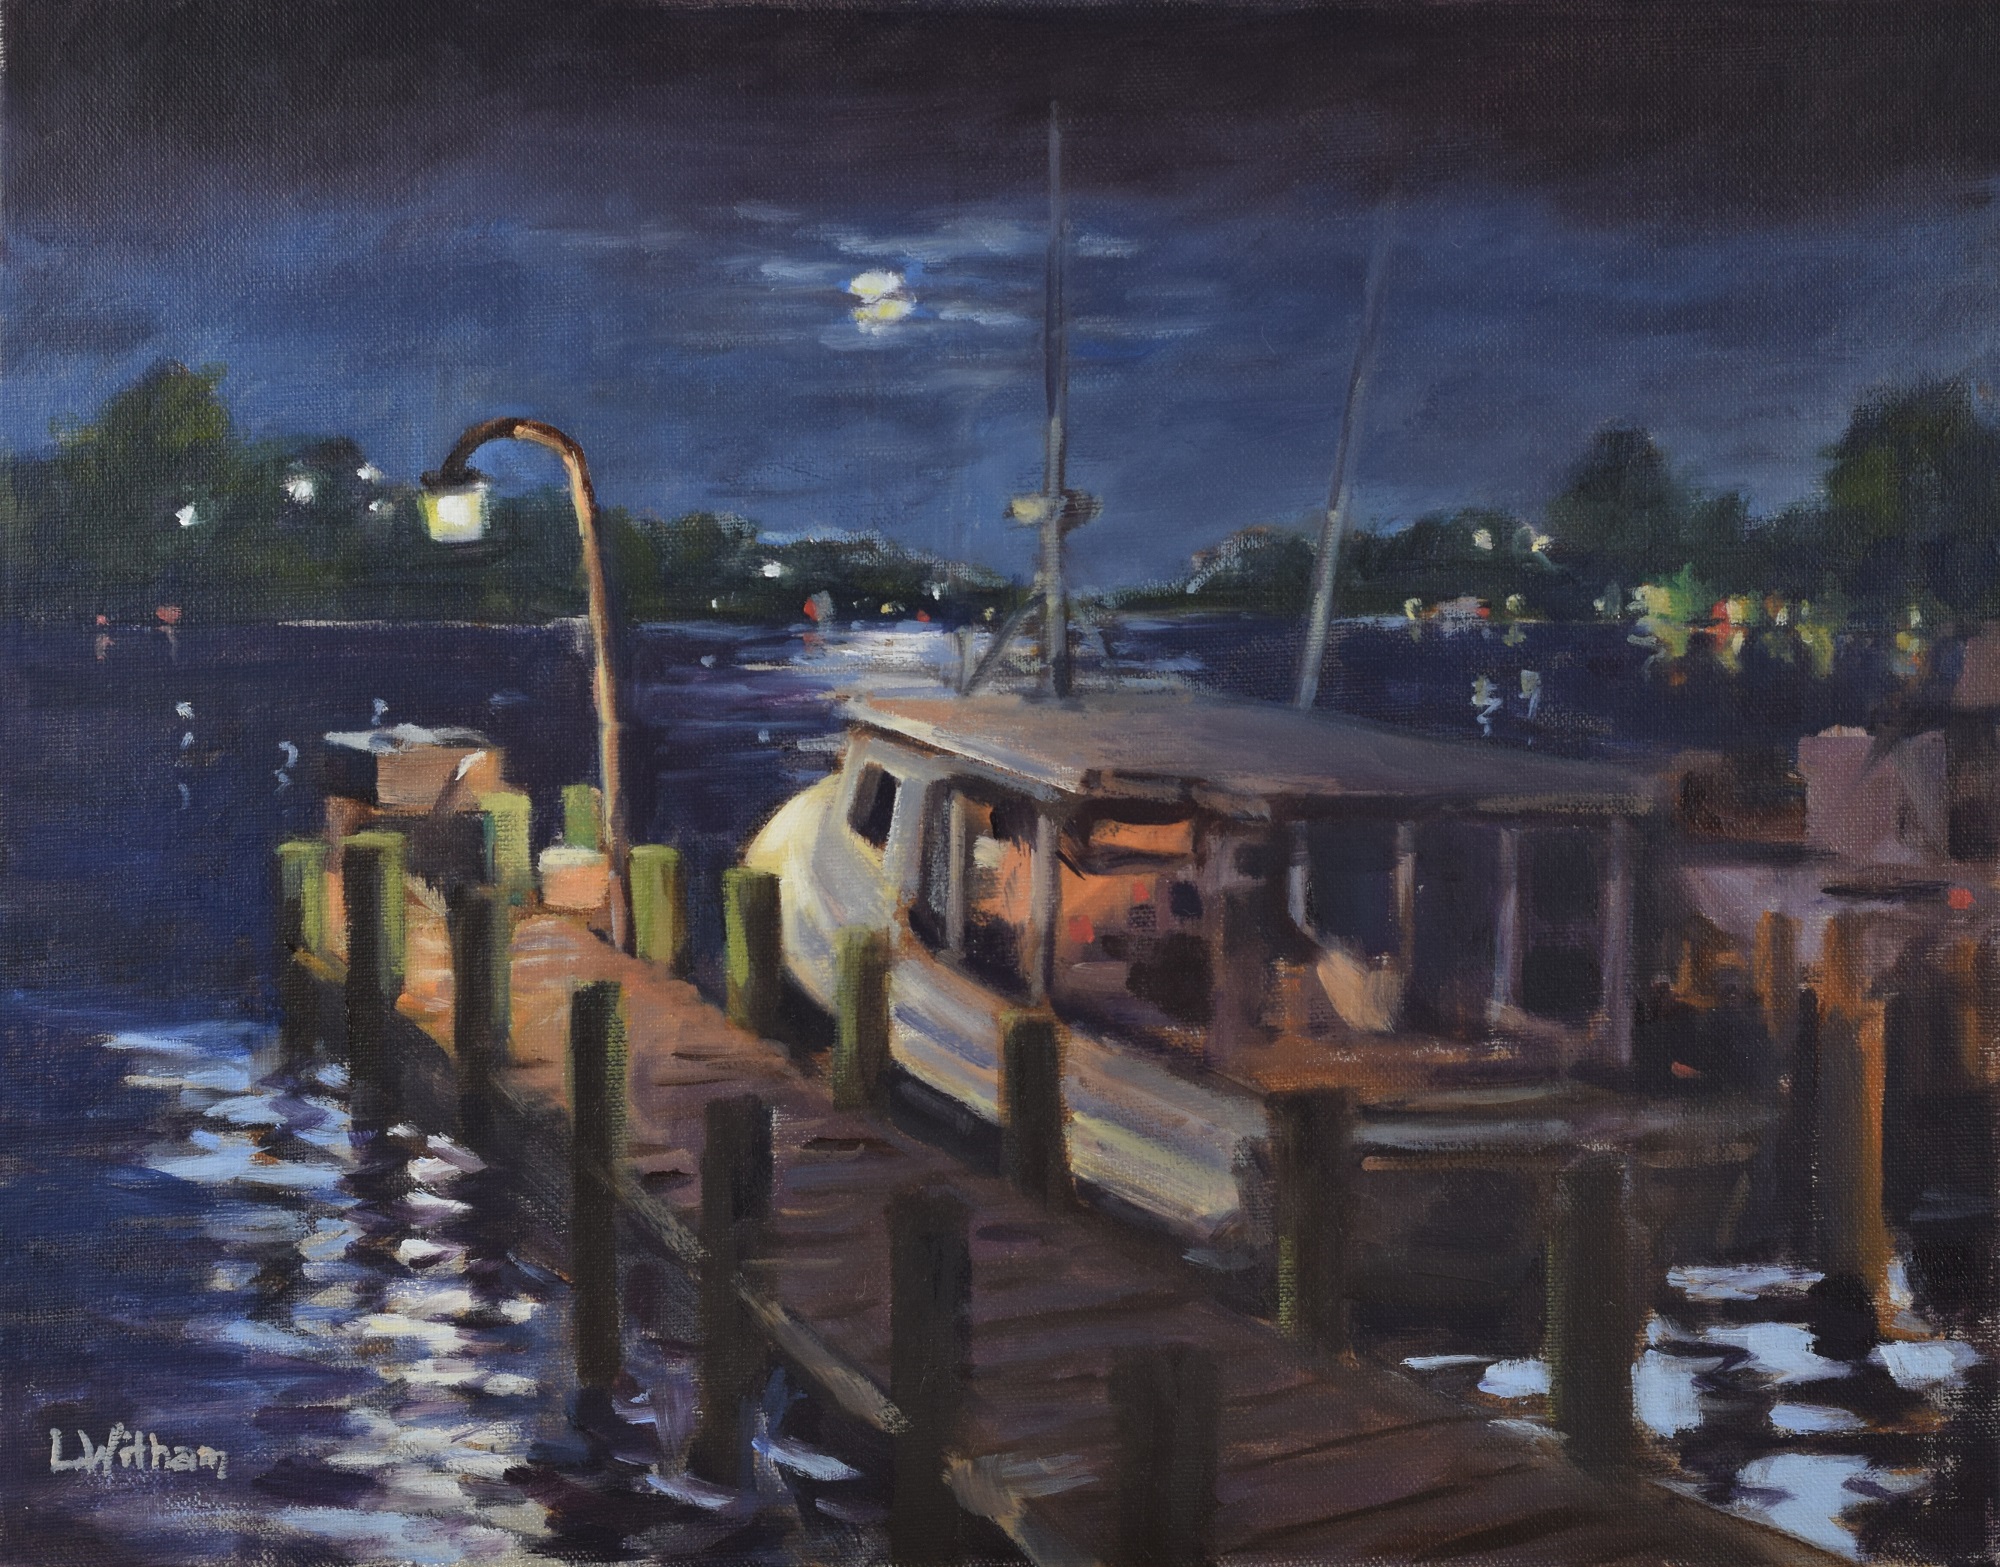 Night Docking, Oil on canvas, 11x14